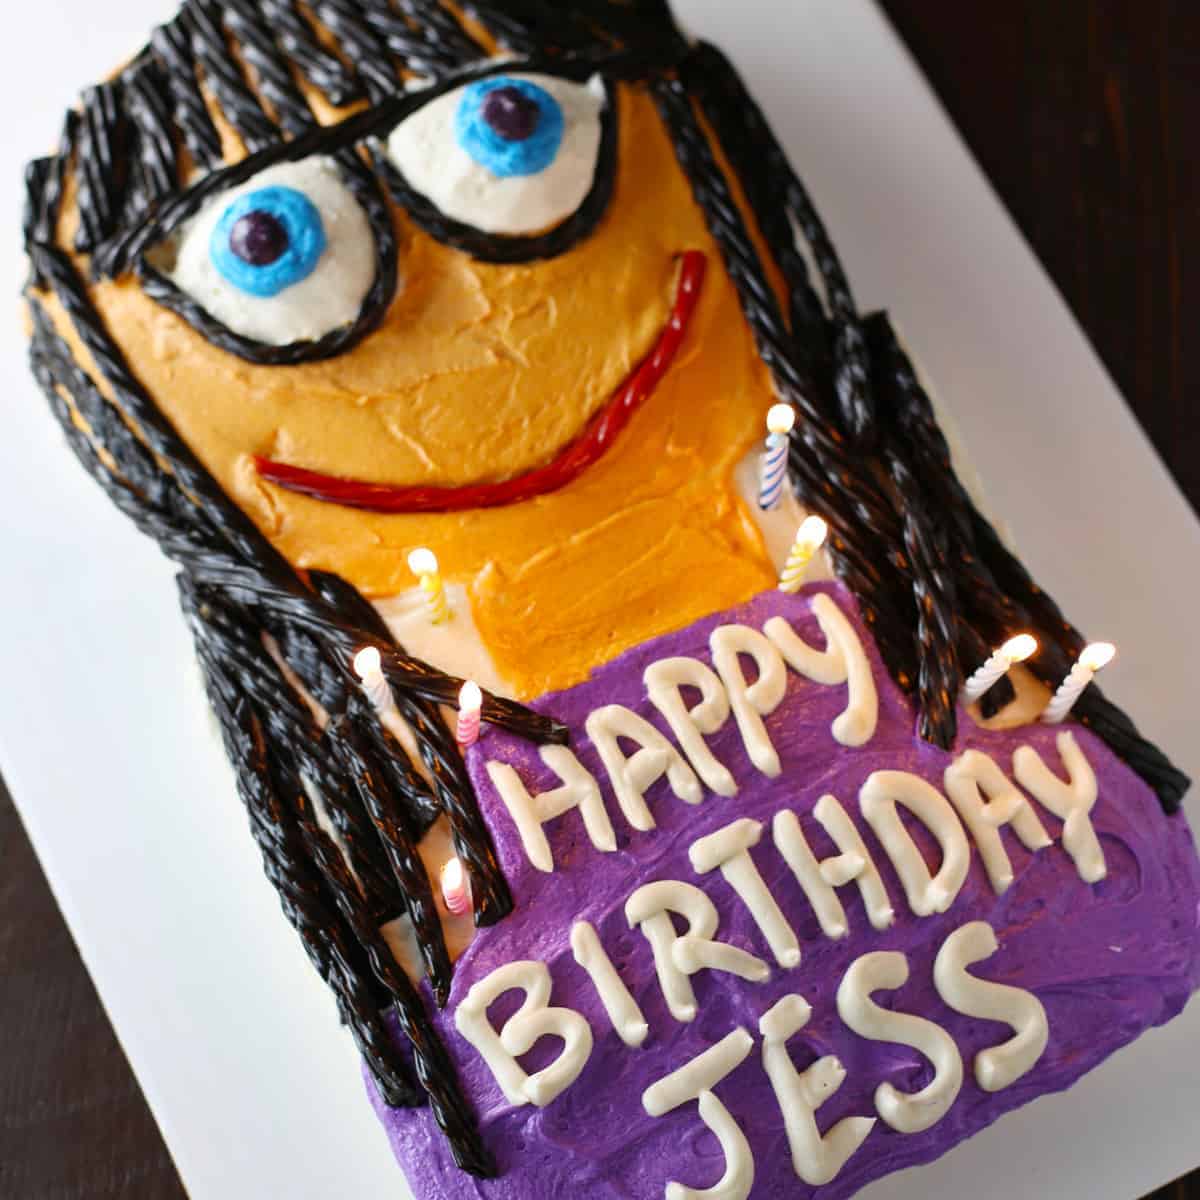 The Egyptian Cake - Jessica Harris Cake Design